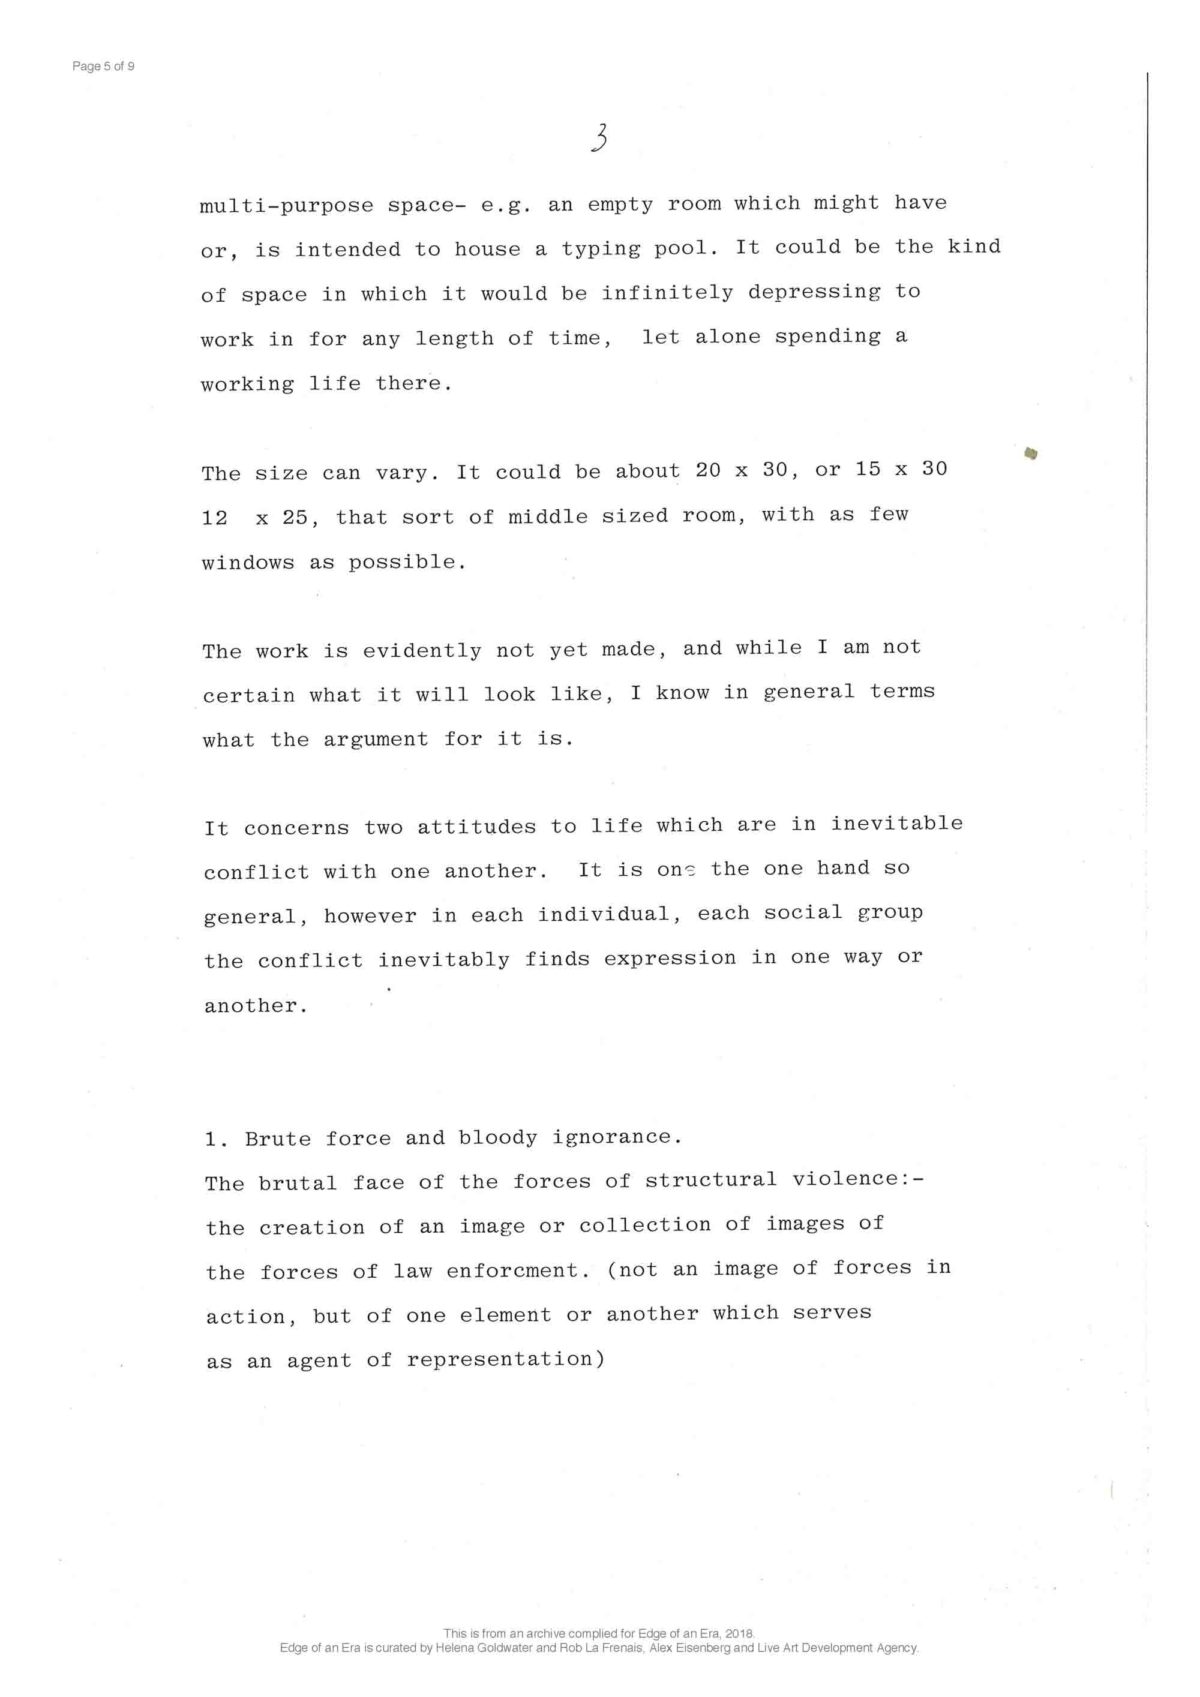 Stuart Brisley, Correspondence, 1988 (Page 5 of 9)